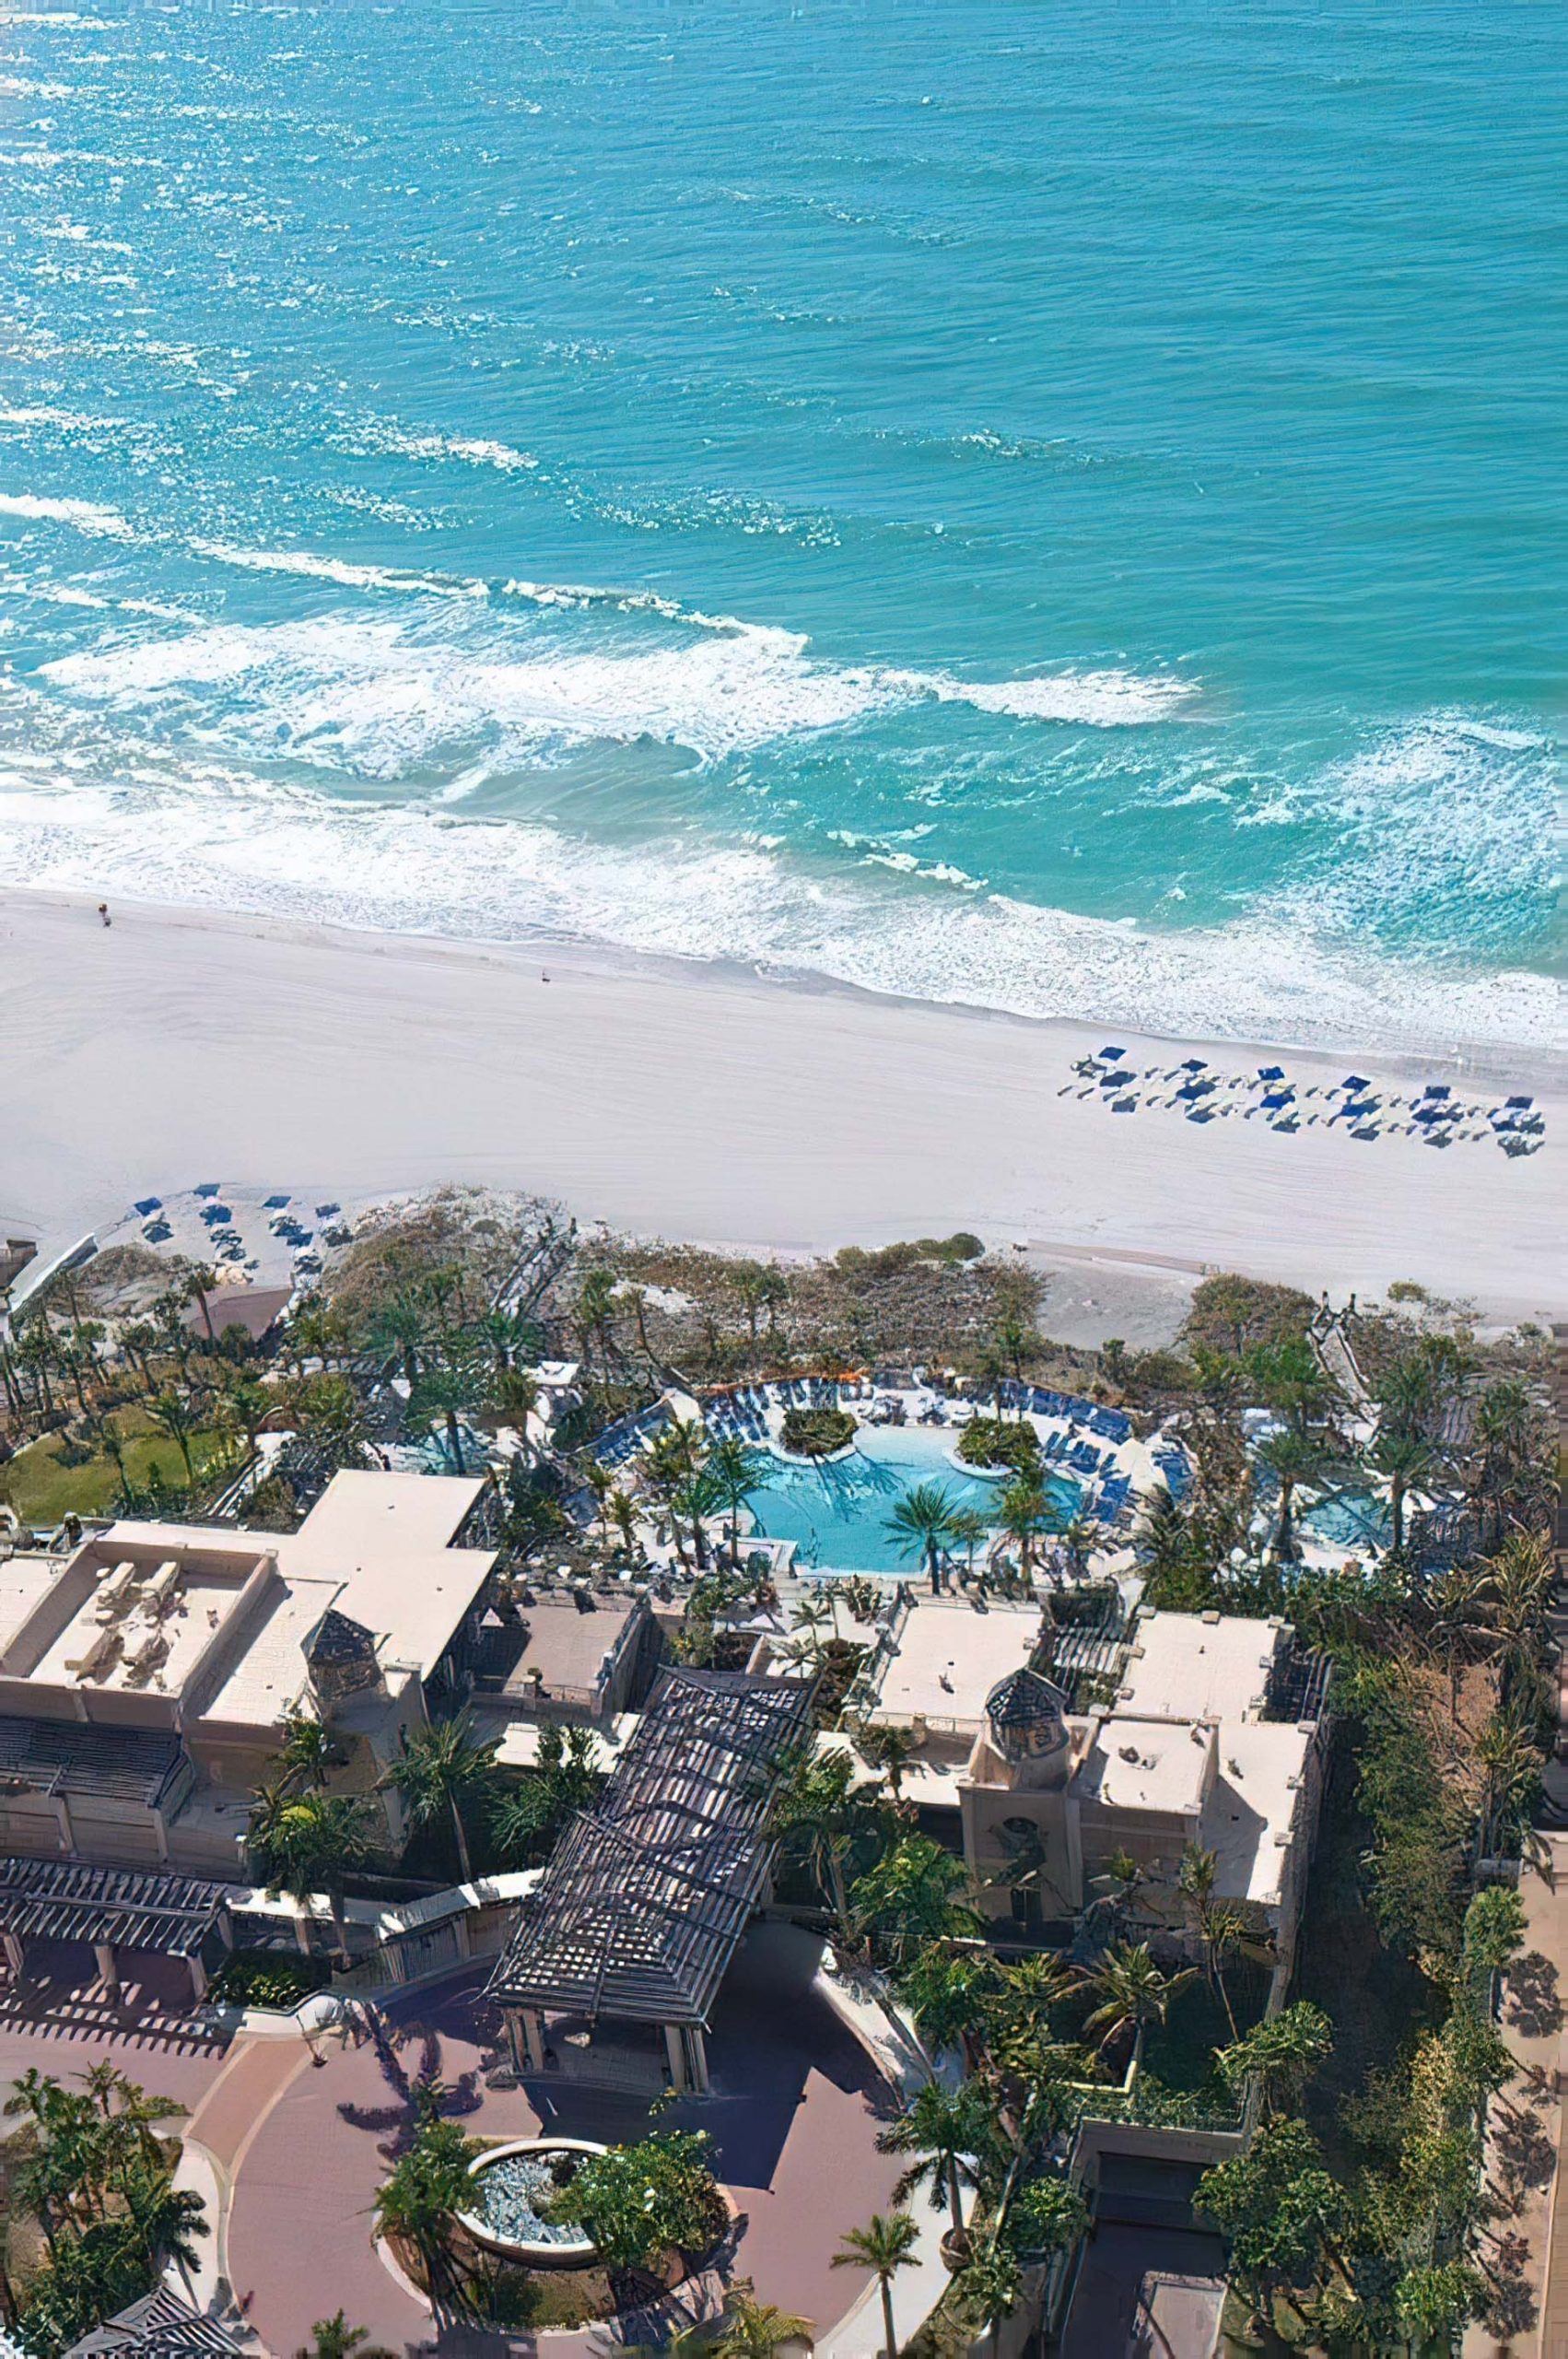 The Ritz-Carlton Beach Club Resort - Lido Key, Sarasota, FL, USA - Aerial Ocean View